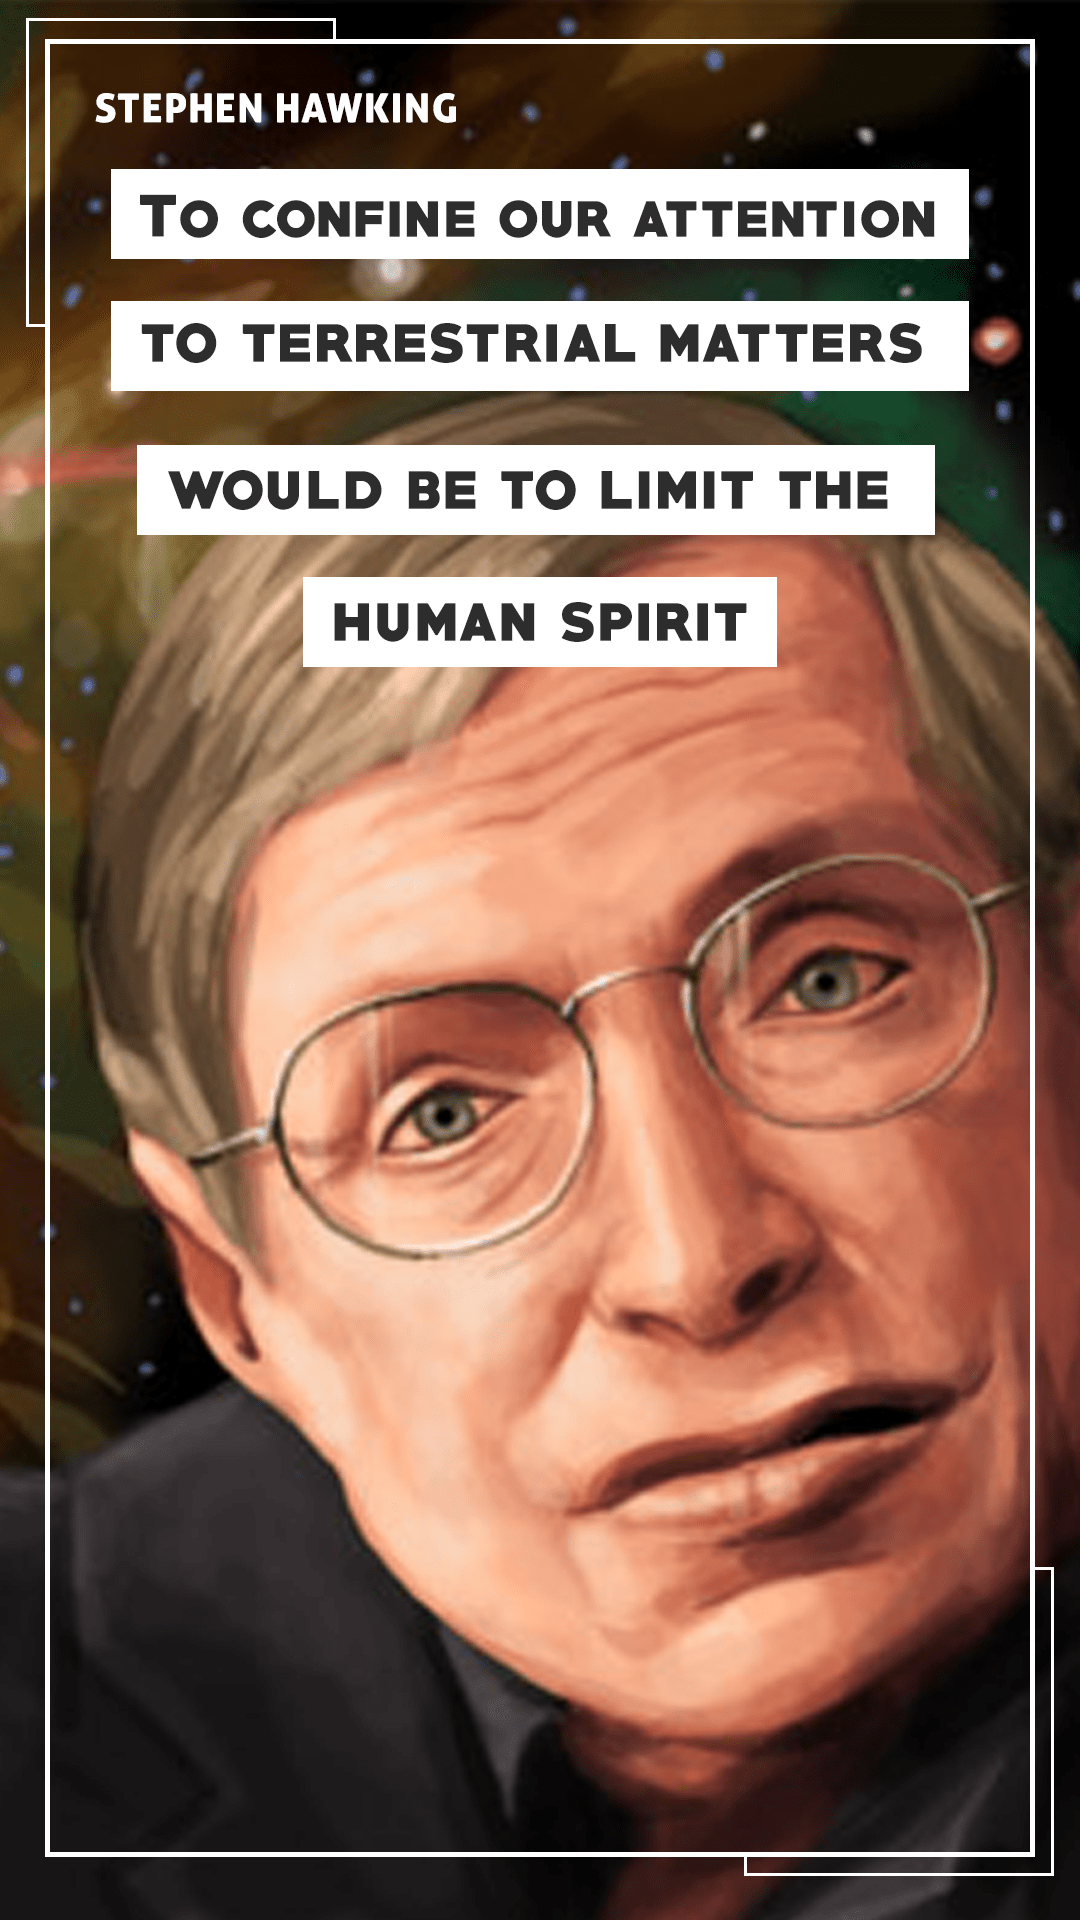 Stephen Hawking Wallpapers - Top Free Stephen Hawking Backgrounds